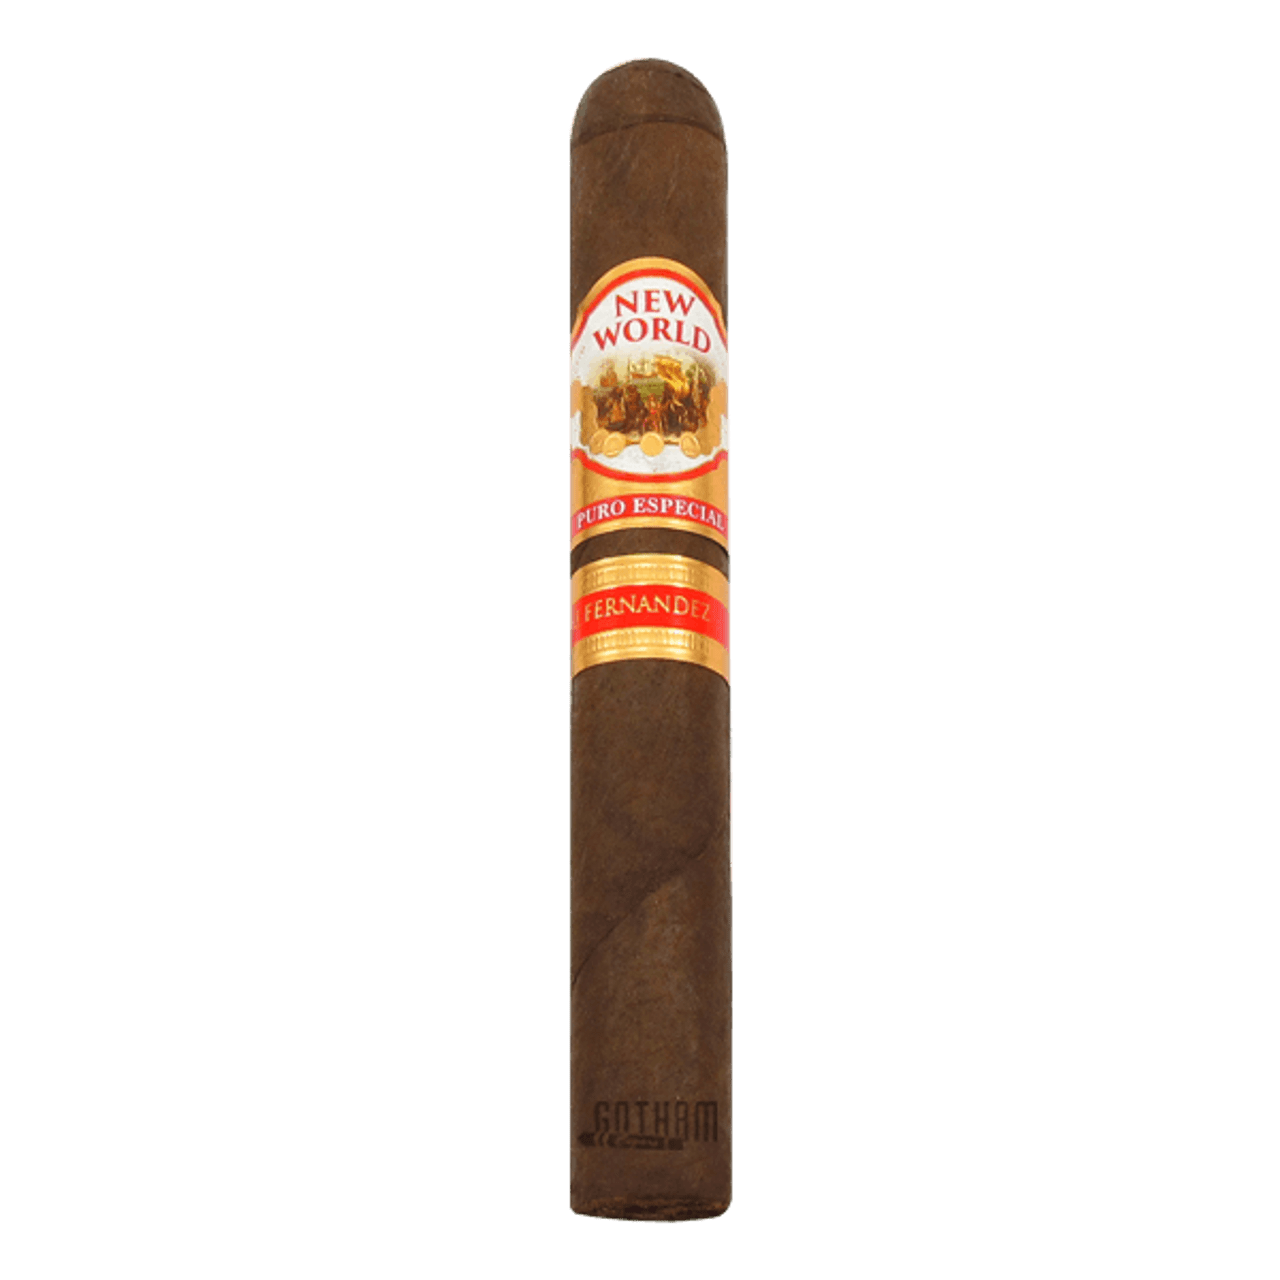 New World Puro Especial - AJ Fernandez Cigars